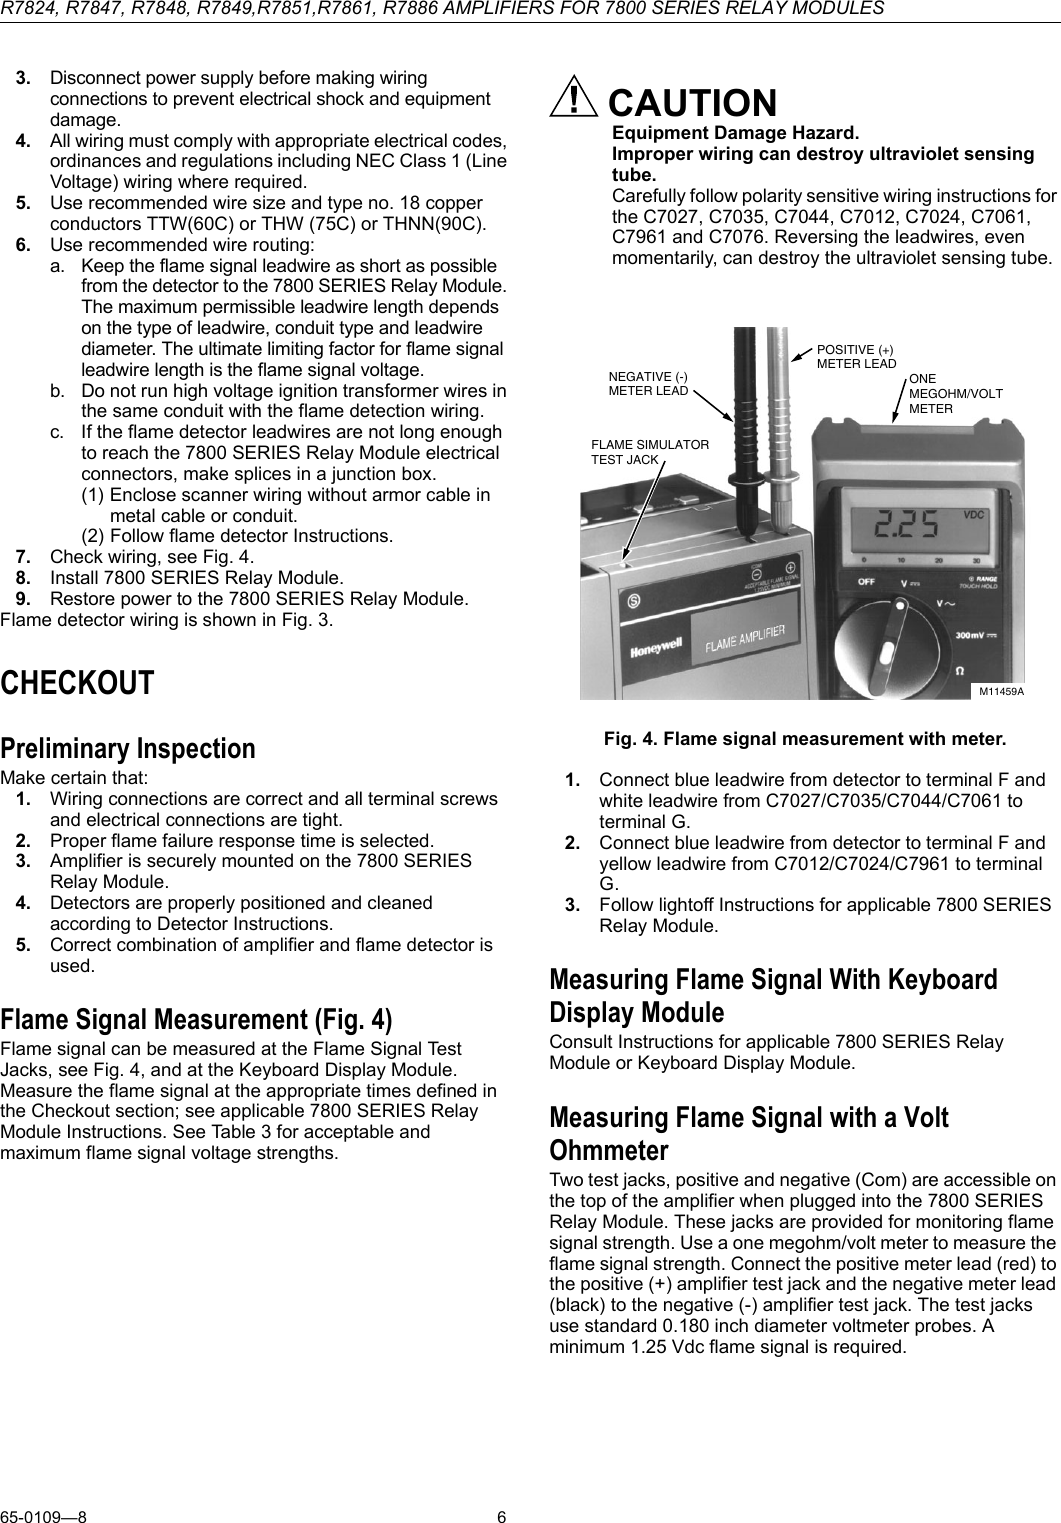 Page 6 of 8 - Honeywell Honeywell-Honeywell-Thermostat-R7847-Users-Manual- 65-0109 - R7824, R7847, R7848, R7849,R7851,R7861, R7886 Amplifiers Fir 7800 SERIES Relay Es  Honeywell-honeywell-thermostat-r7847-users-manual